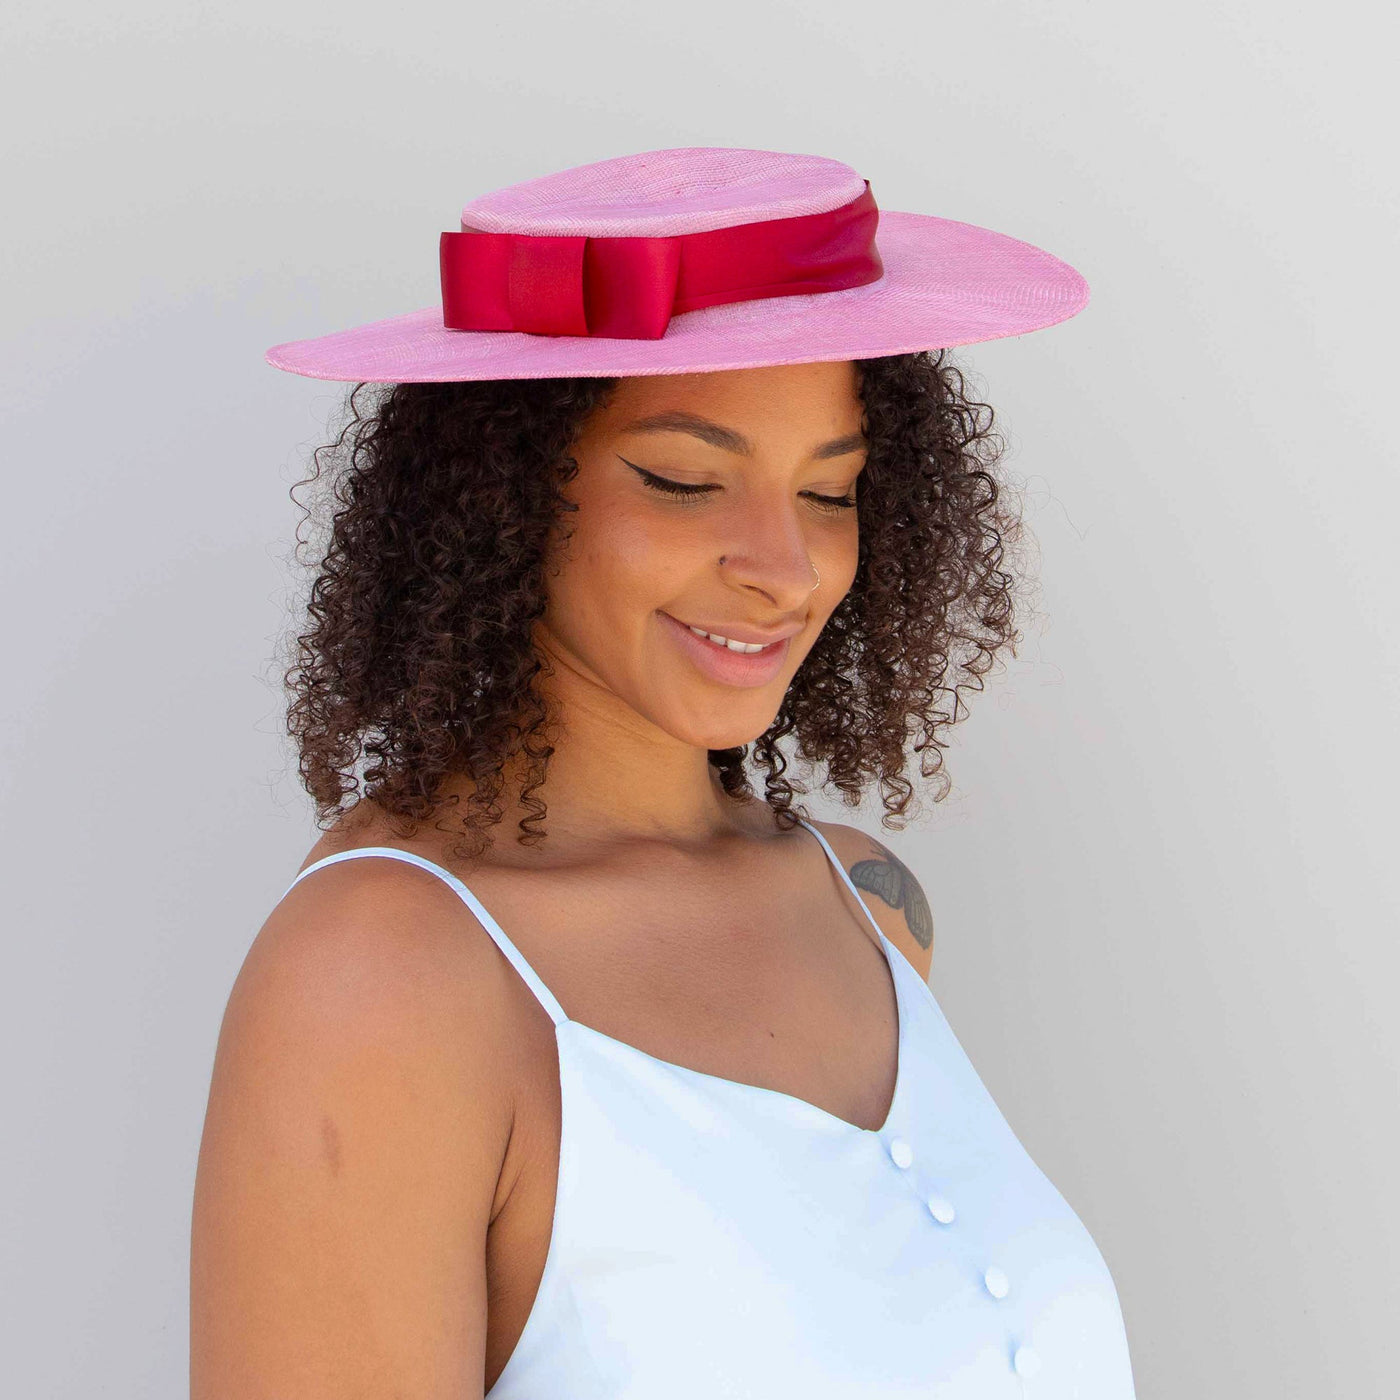 DRESS - Women's Low Profile Sinamay Fascinator Hat